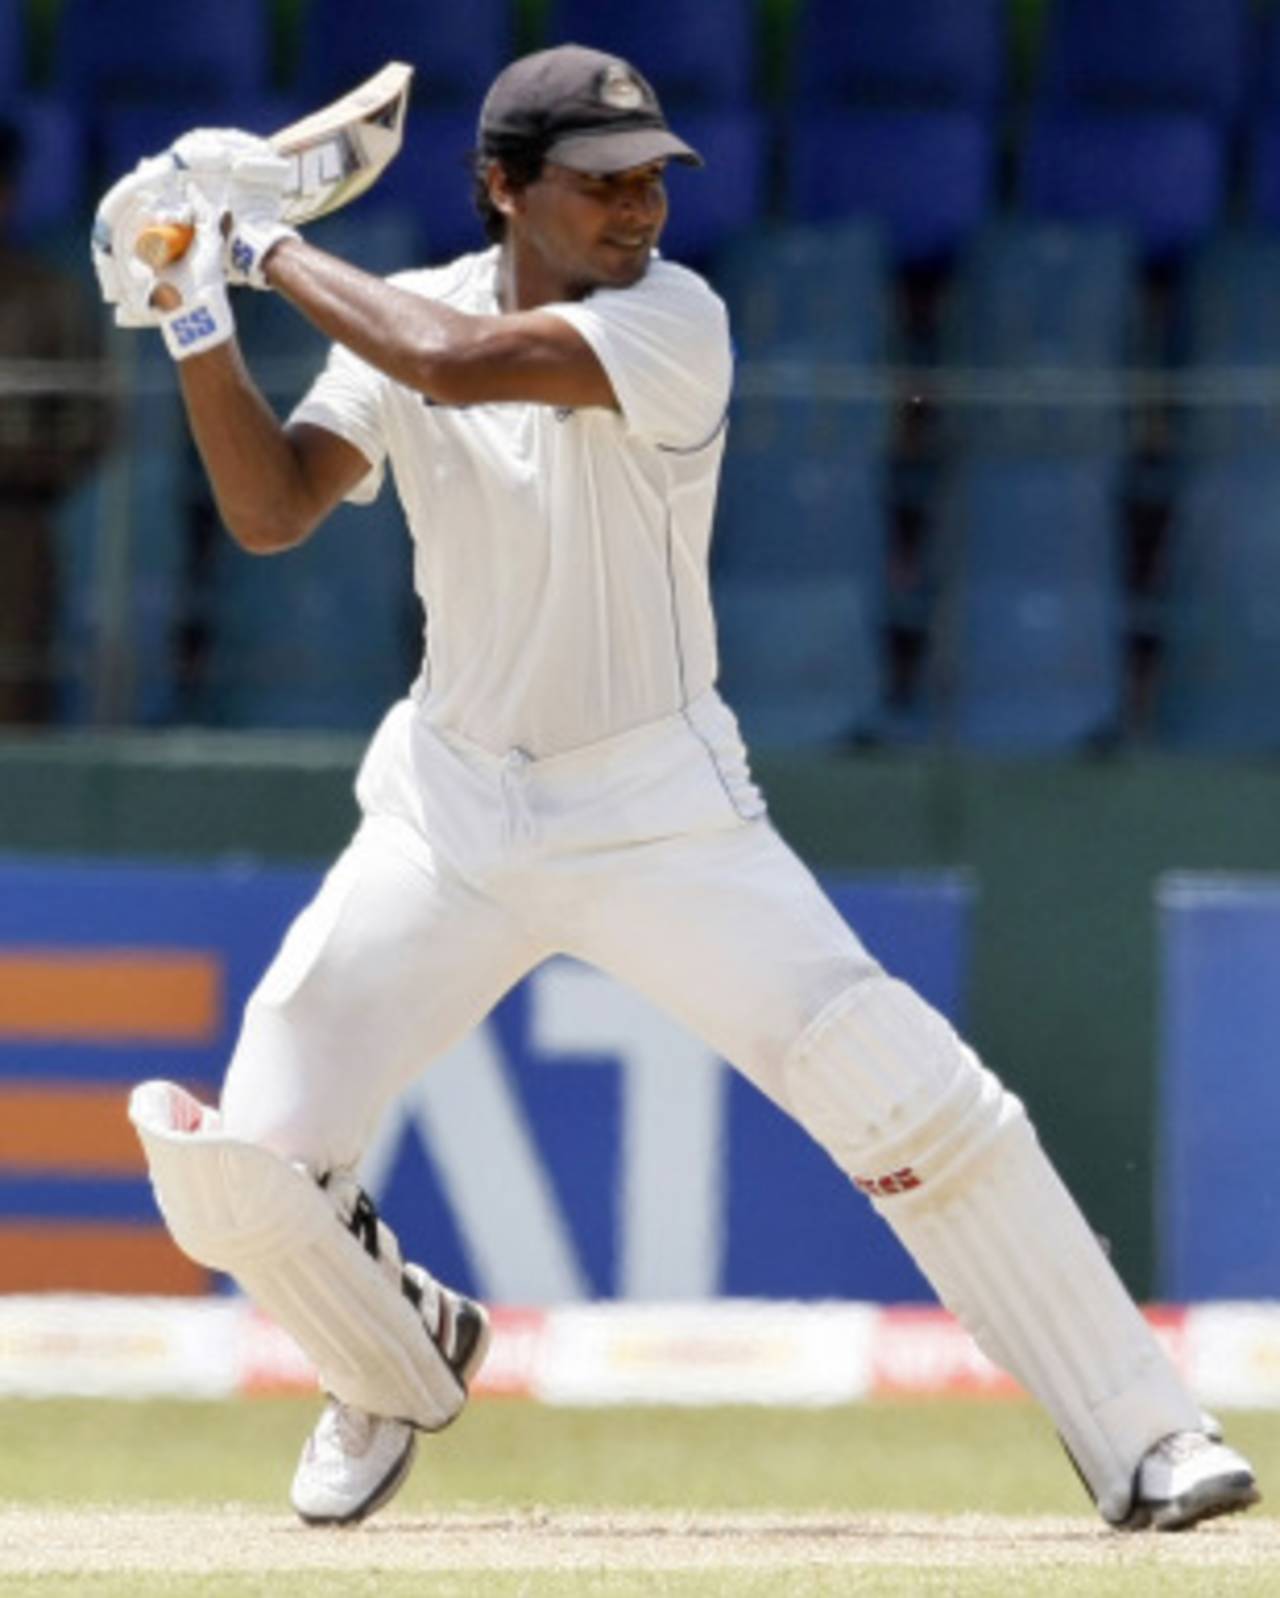 Kumar Sangakkara's batting manages to combine elegance and aggression&nbsp;&nbsp;&bull;&nbsp;&nbsp;Associated Press